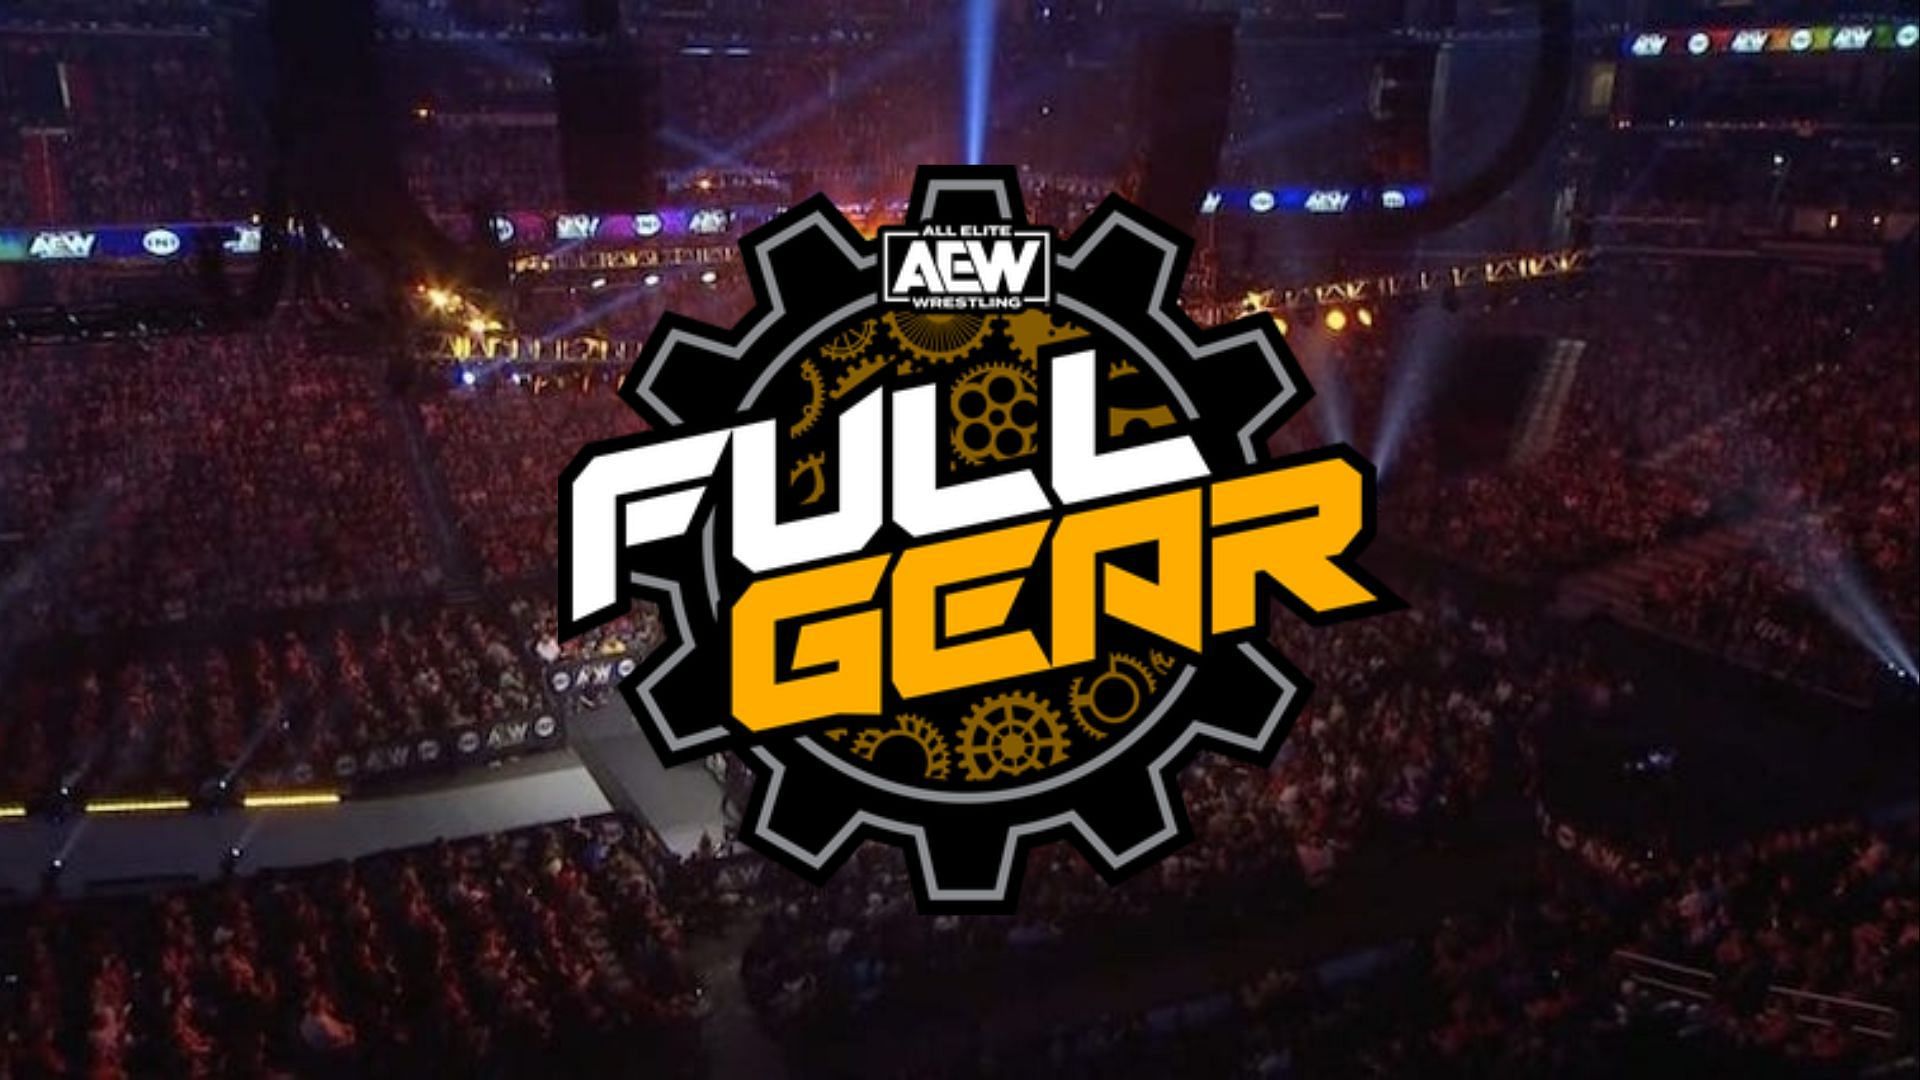 AEW Full Gear has been an exciting show so far!